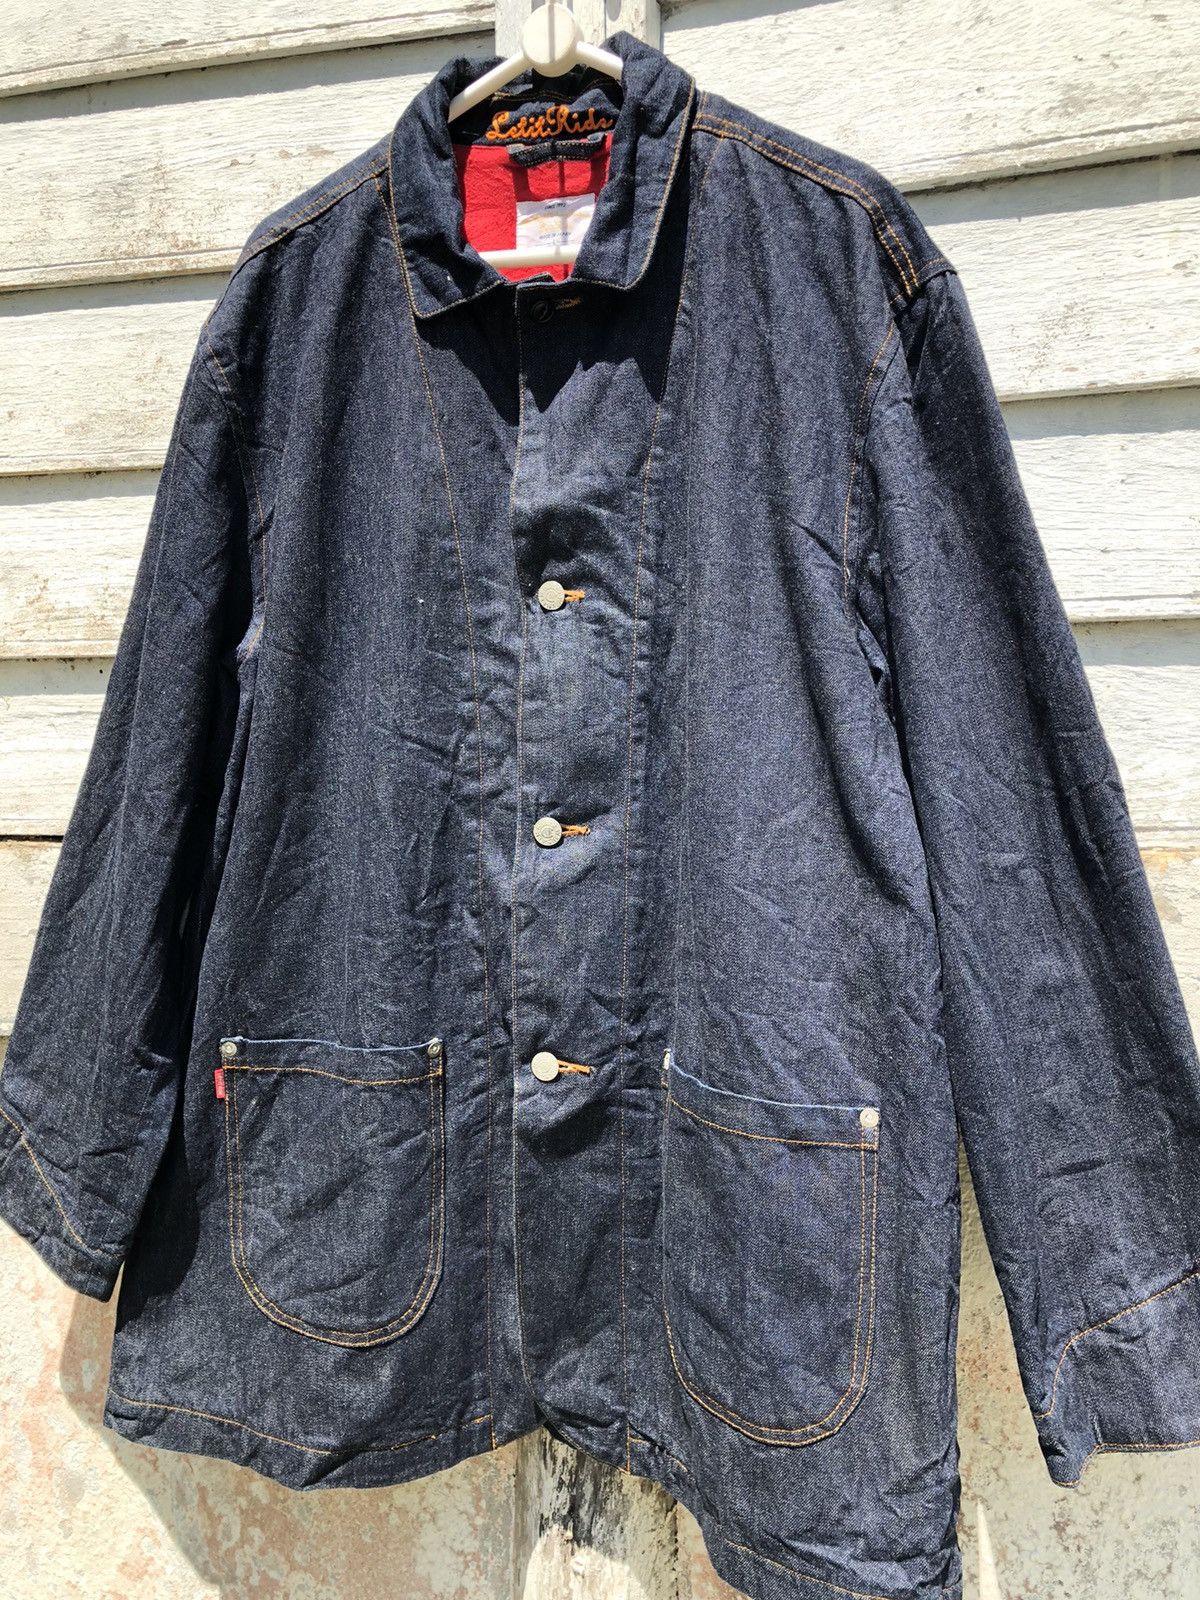 Japanese Brand - Let it Ride 20oz Denim Jacket Cotton Lining - 2